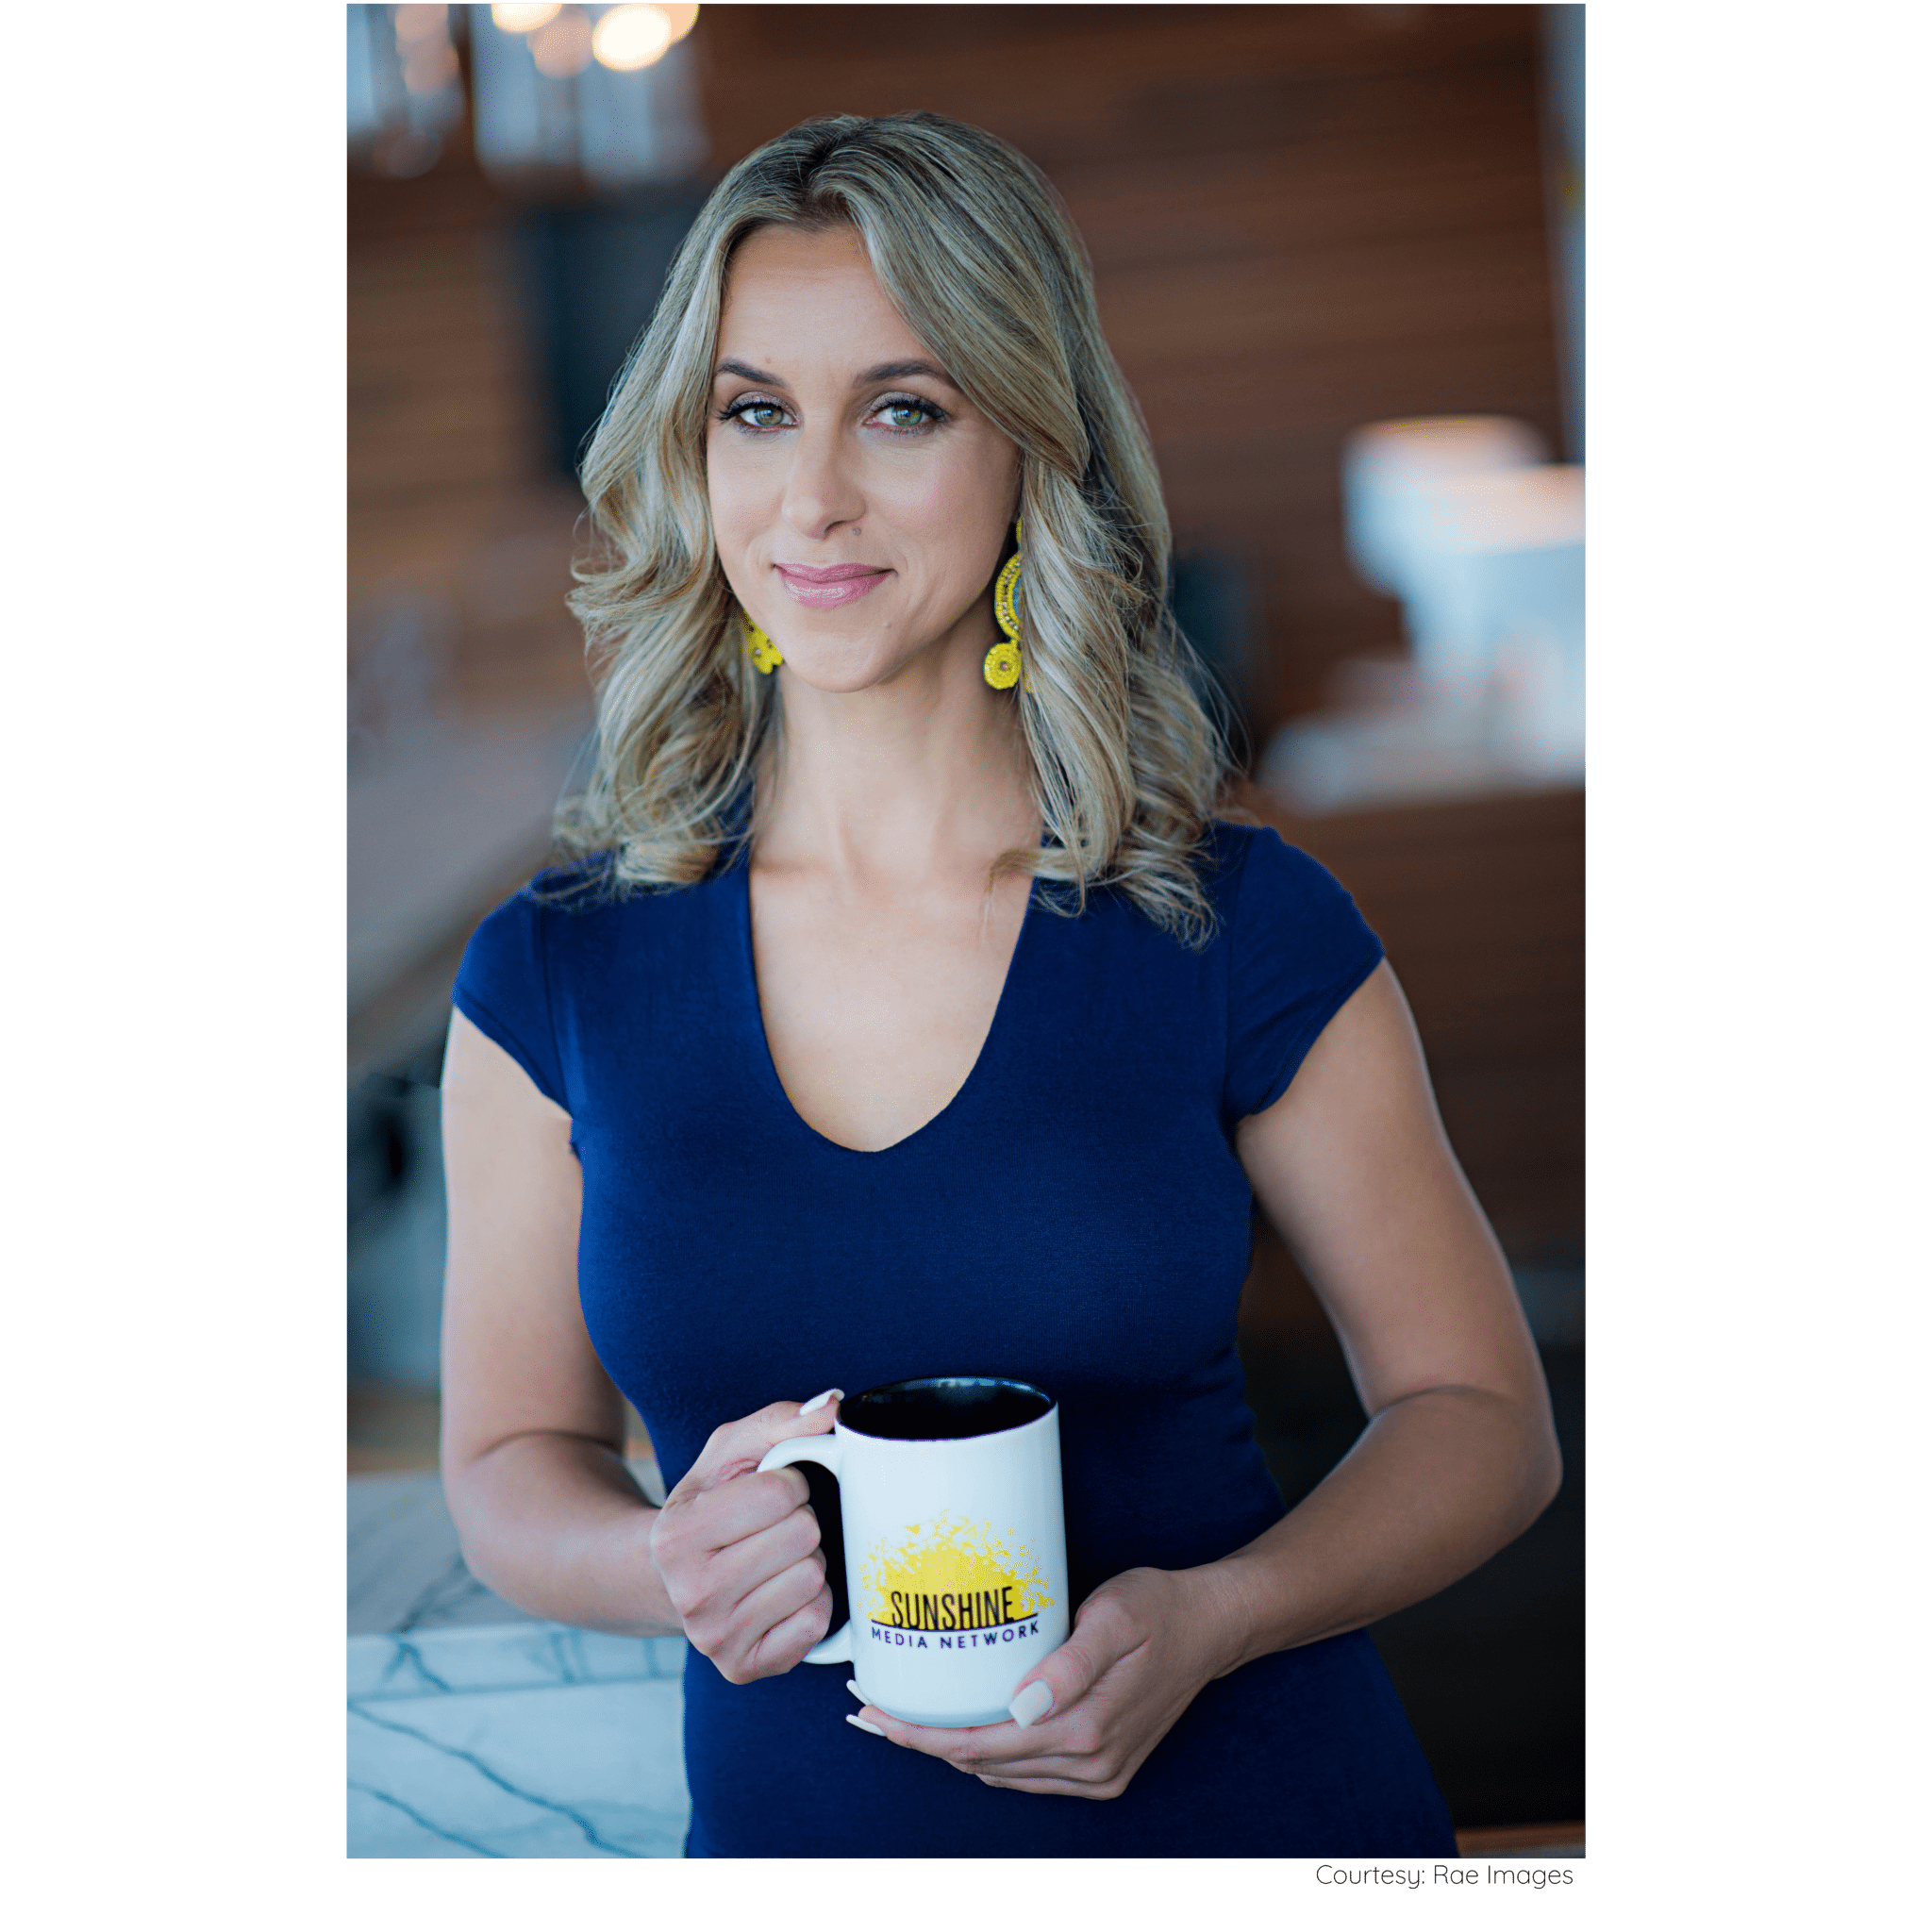 Jennifer Moxley, owner of Sunshine Media Network holding a mug with the Sunshine Media Network logo